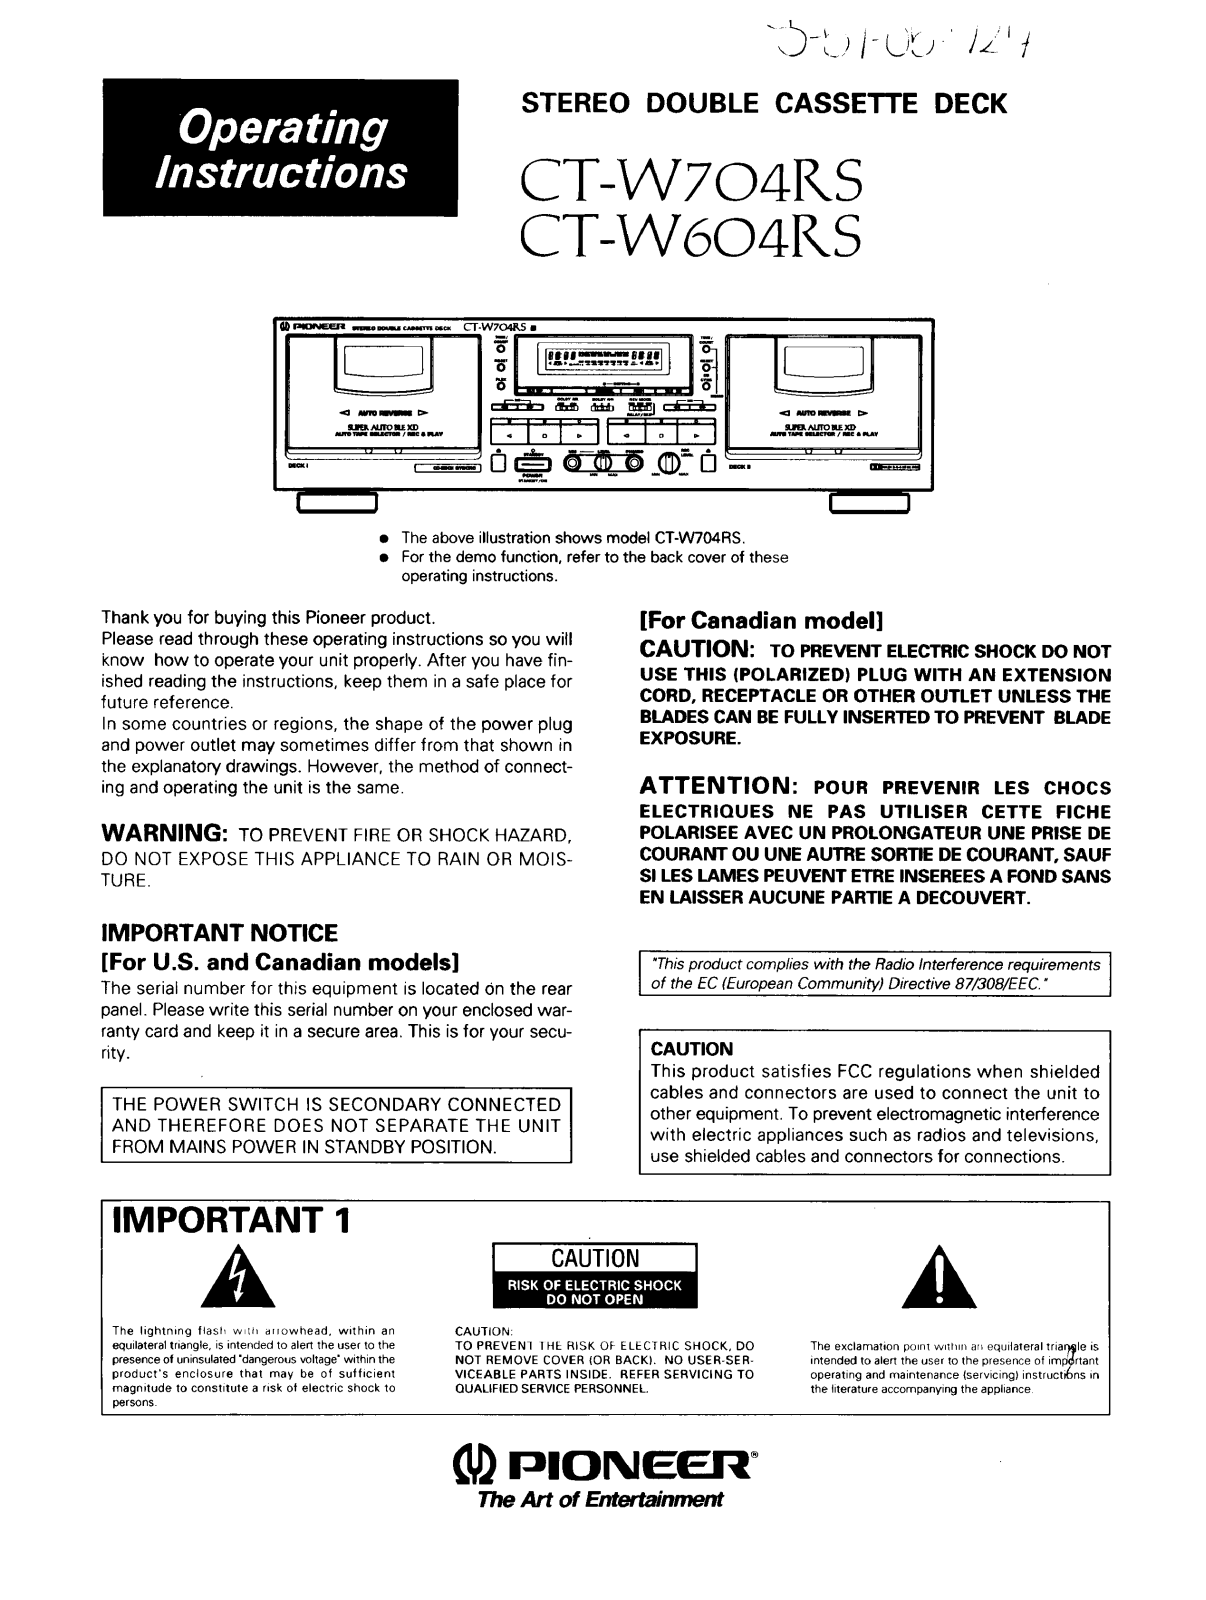 Pioneer CT-W704RS Owner’s Manual